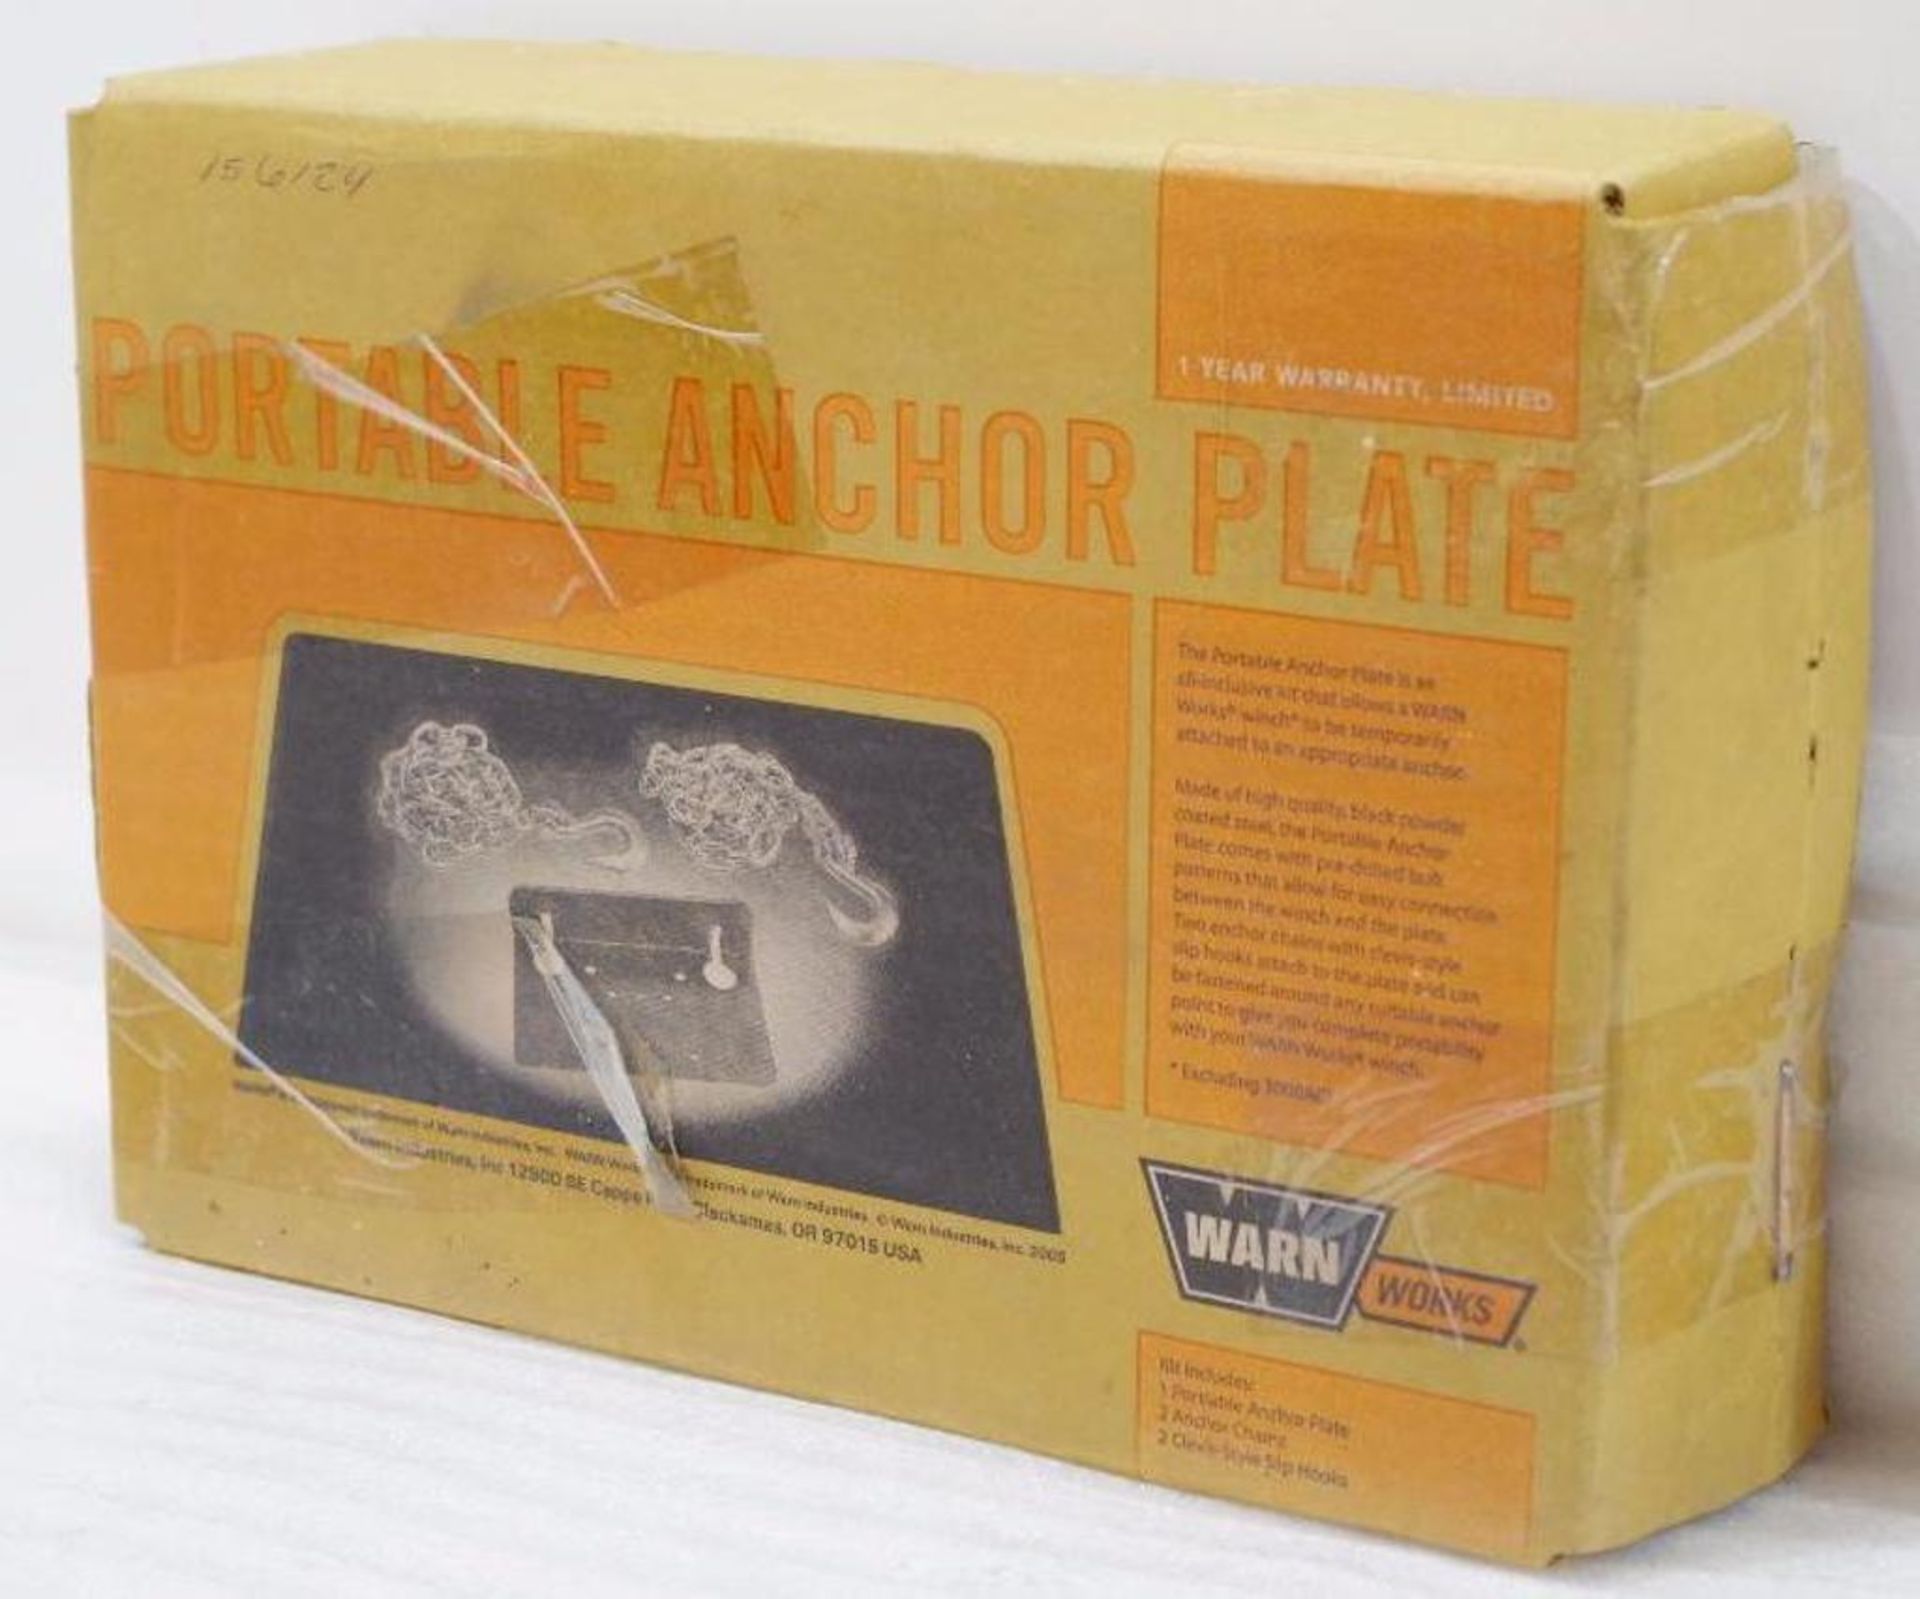 WARNWORKS Portable Anchor Plate Kit, M/N 70770 - Image 2 of 2